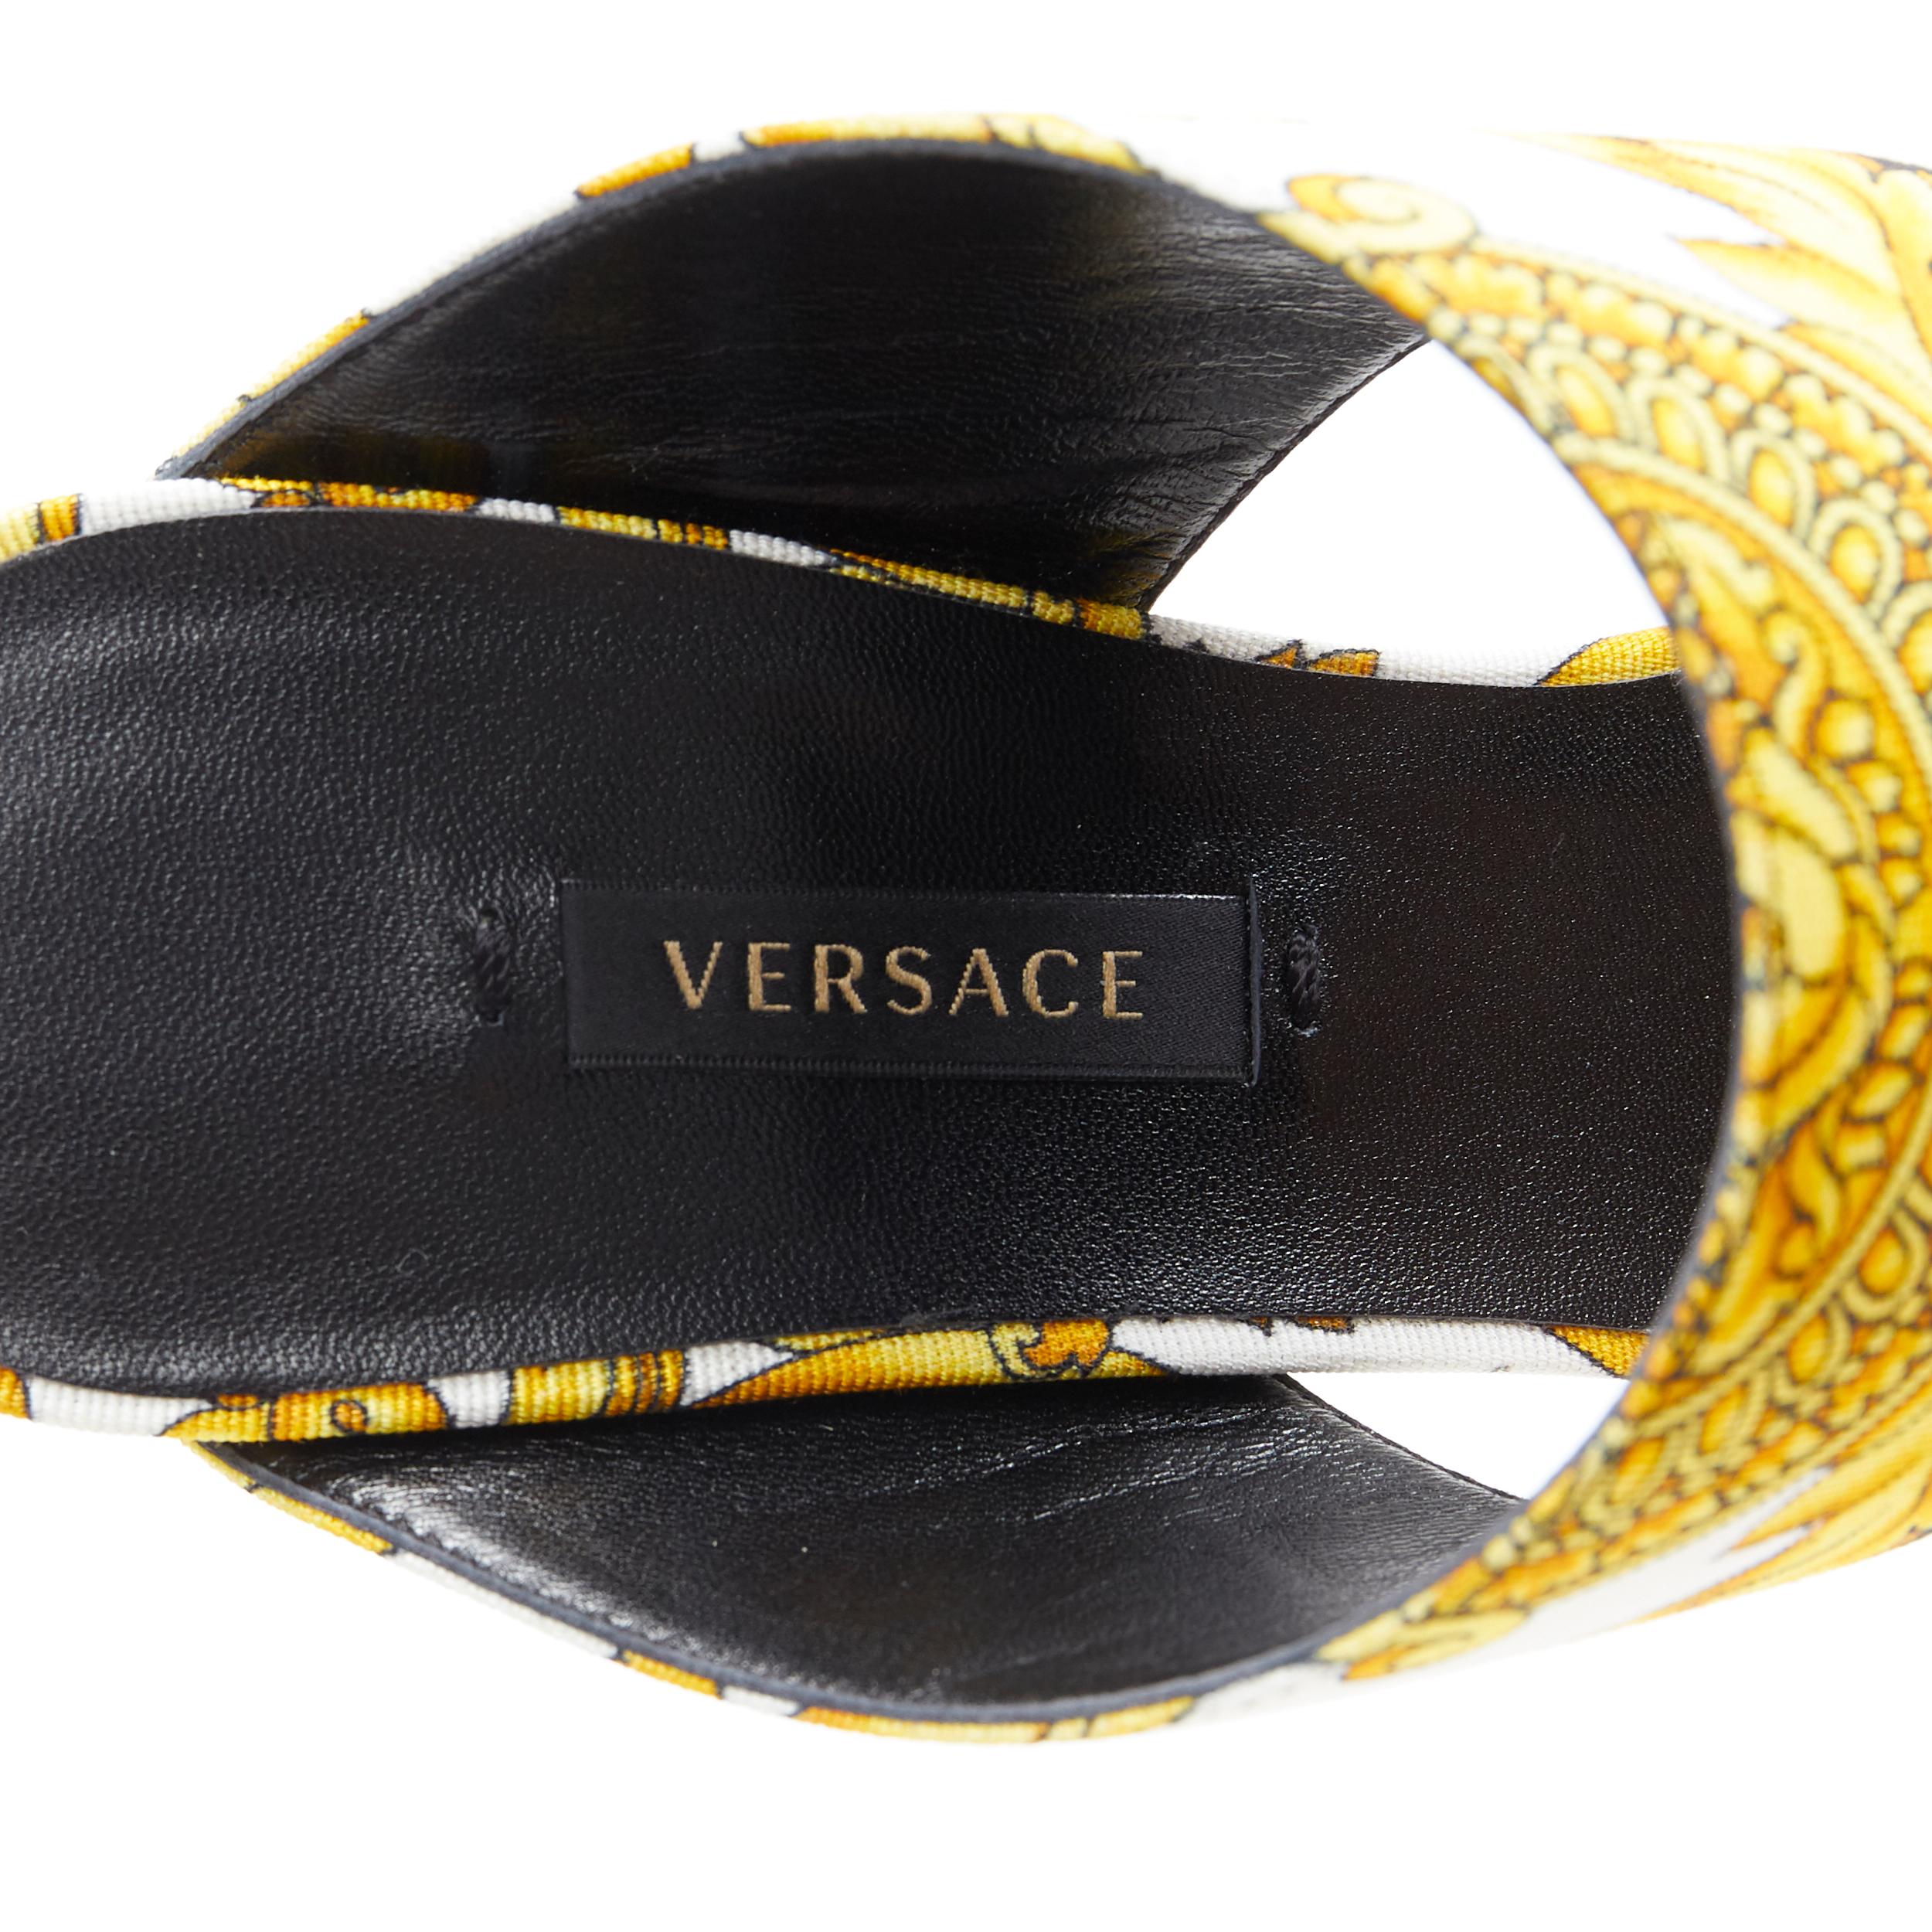 new VERSACE black gold Barocco Hibiscus print fabric open toe mule sandals EU38 5